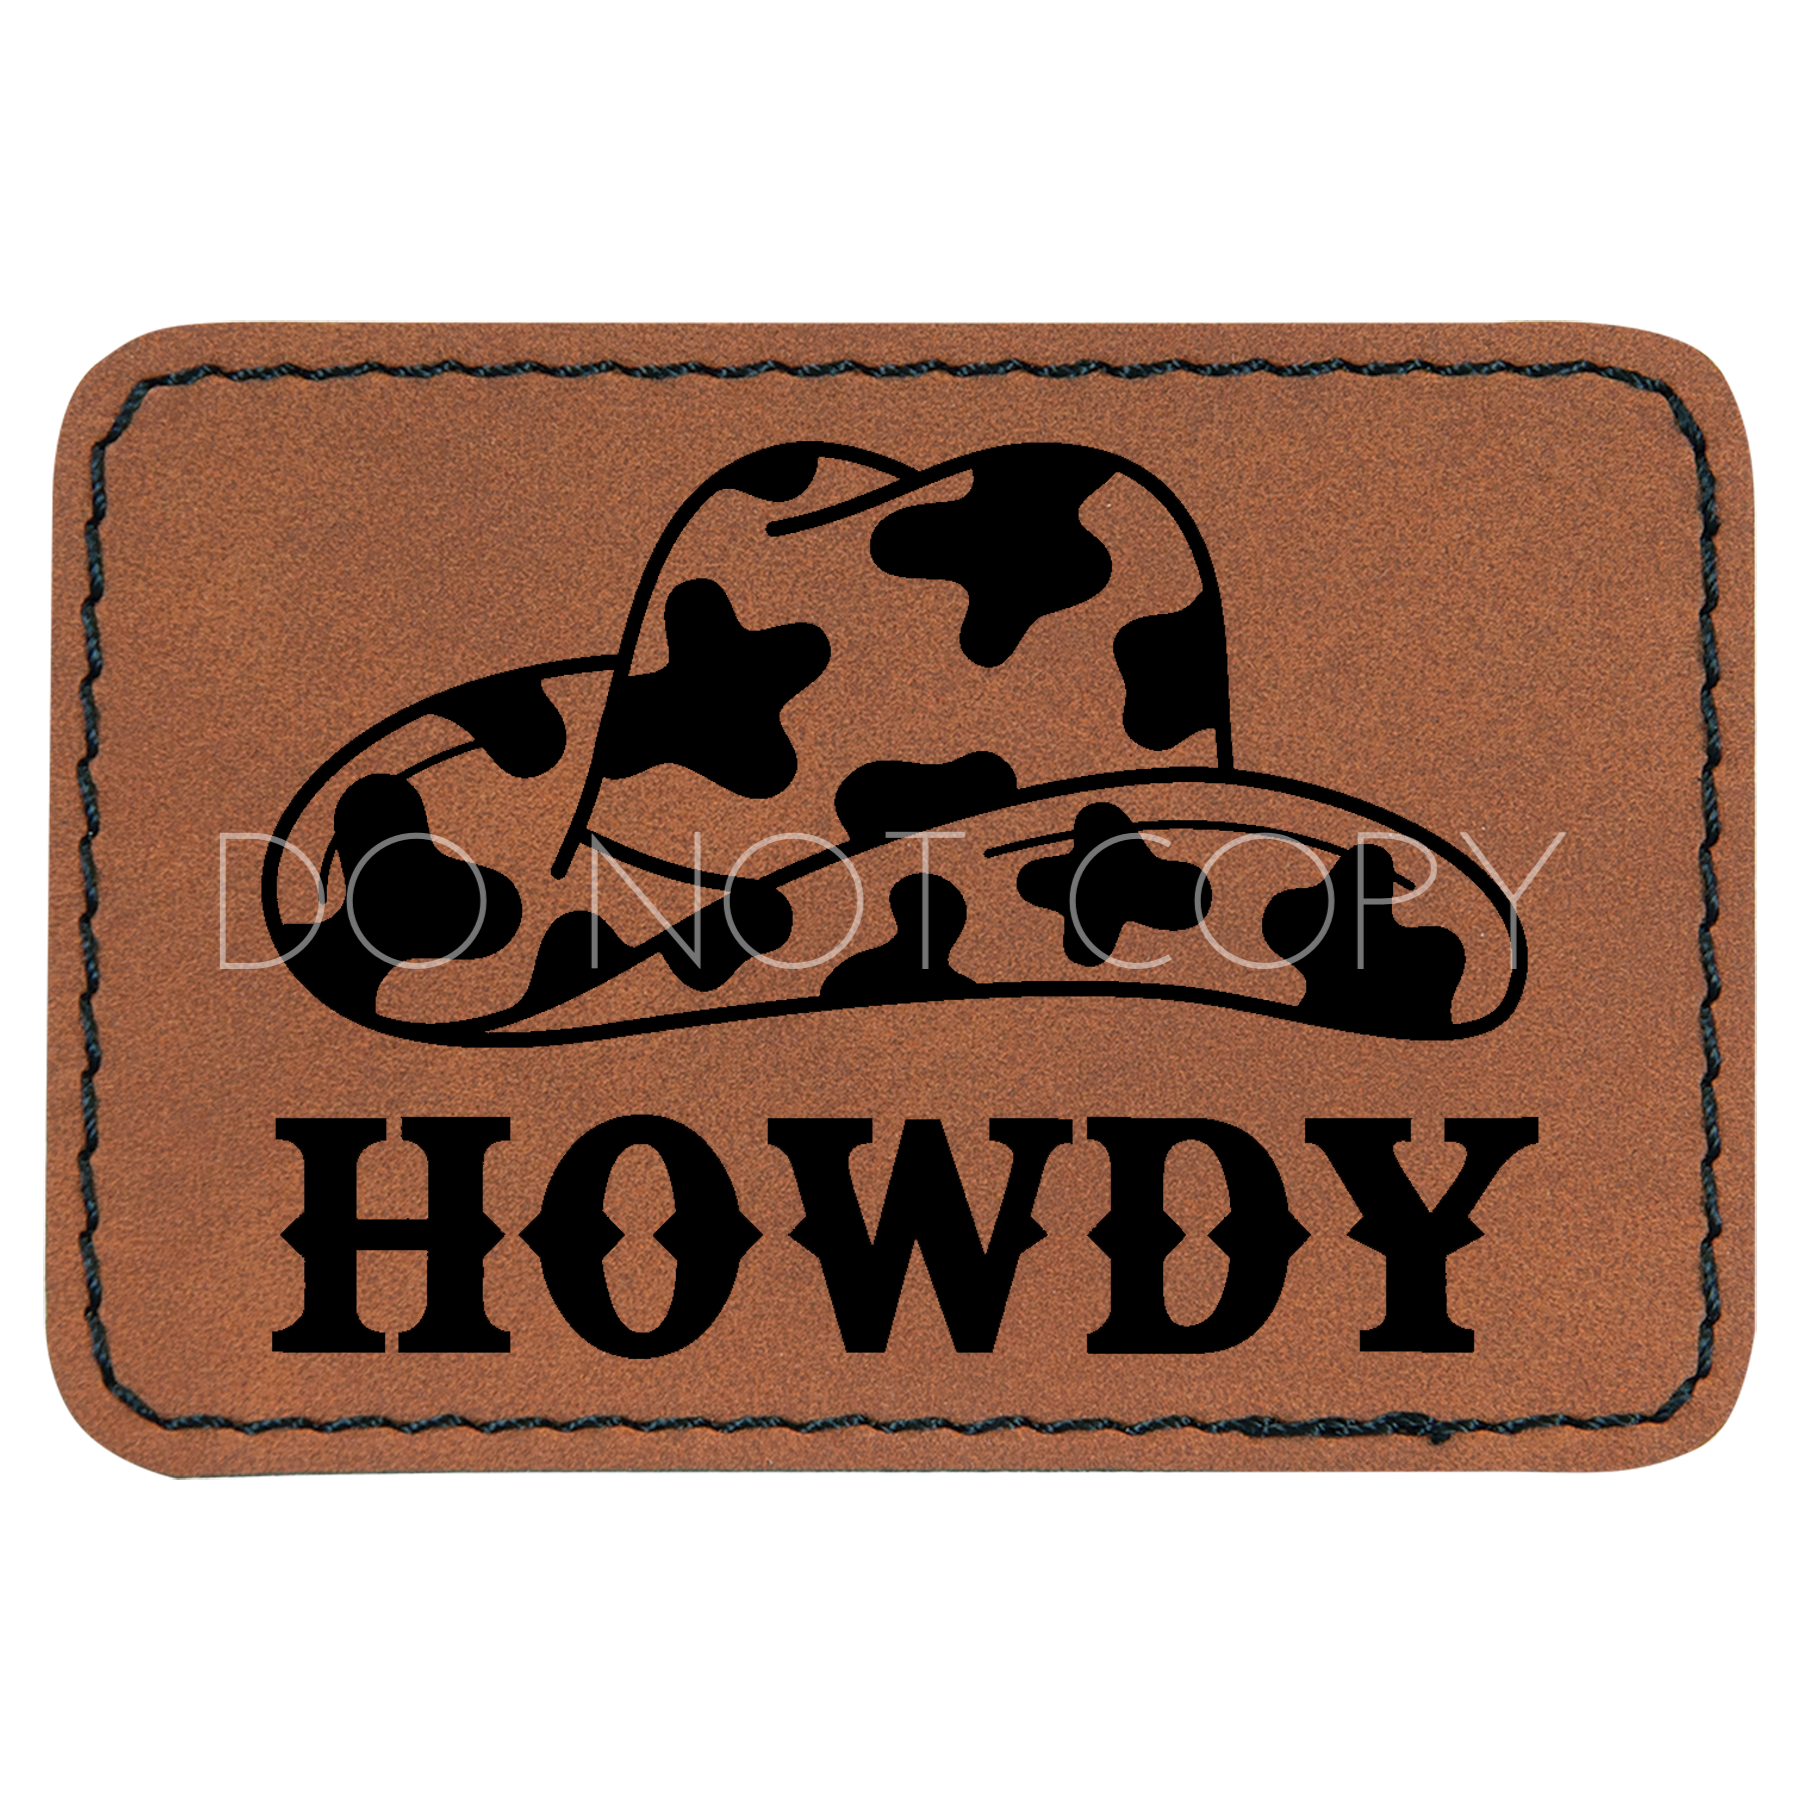 Howdy Cowboy Hat Patch